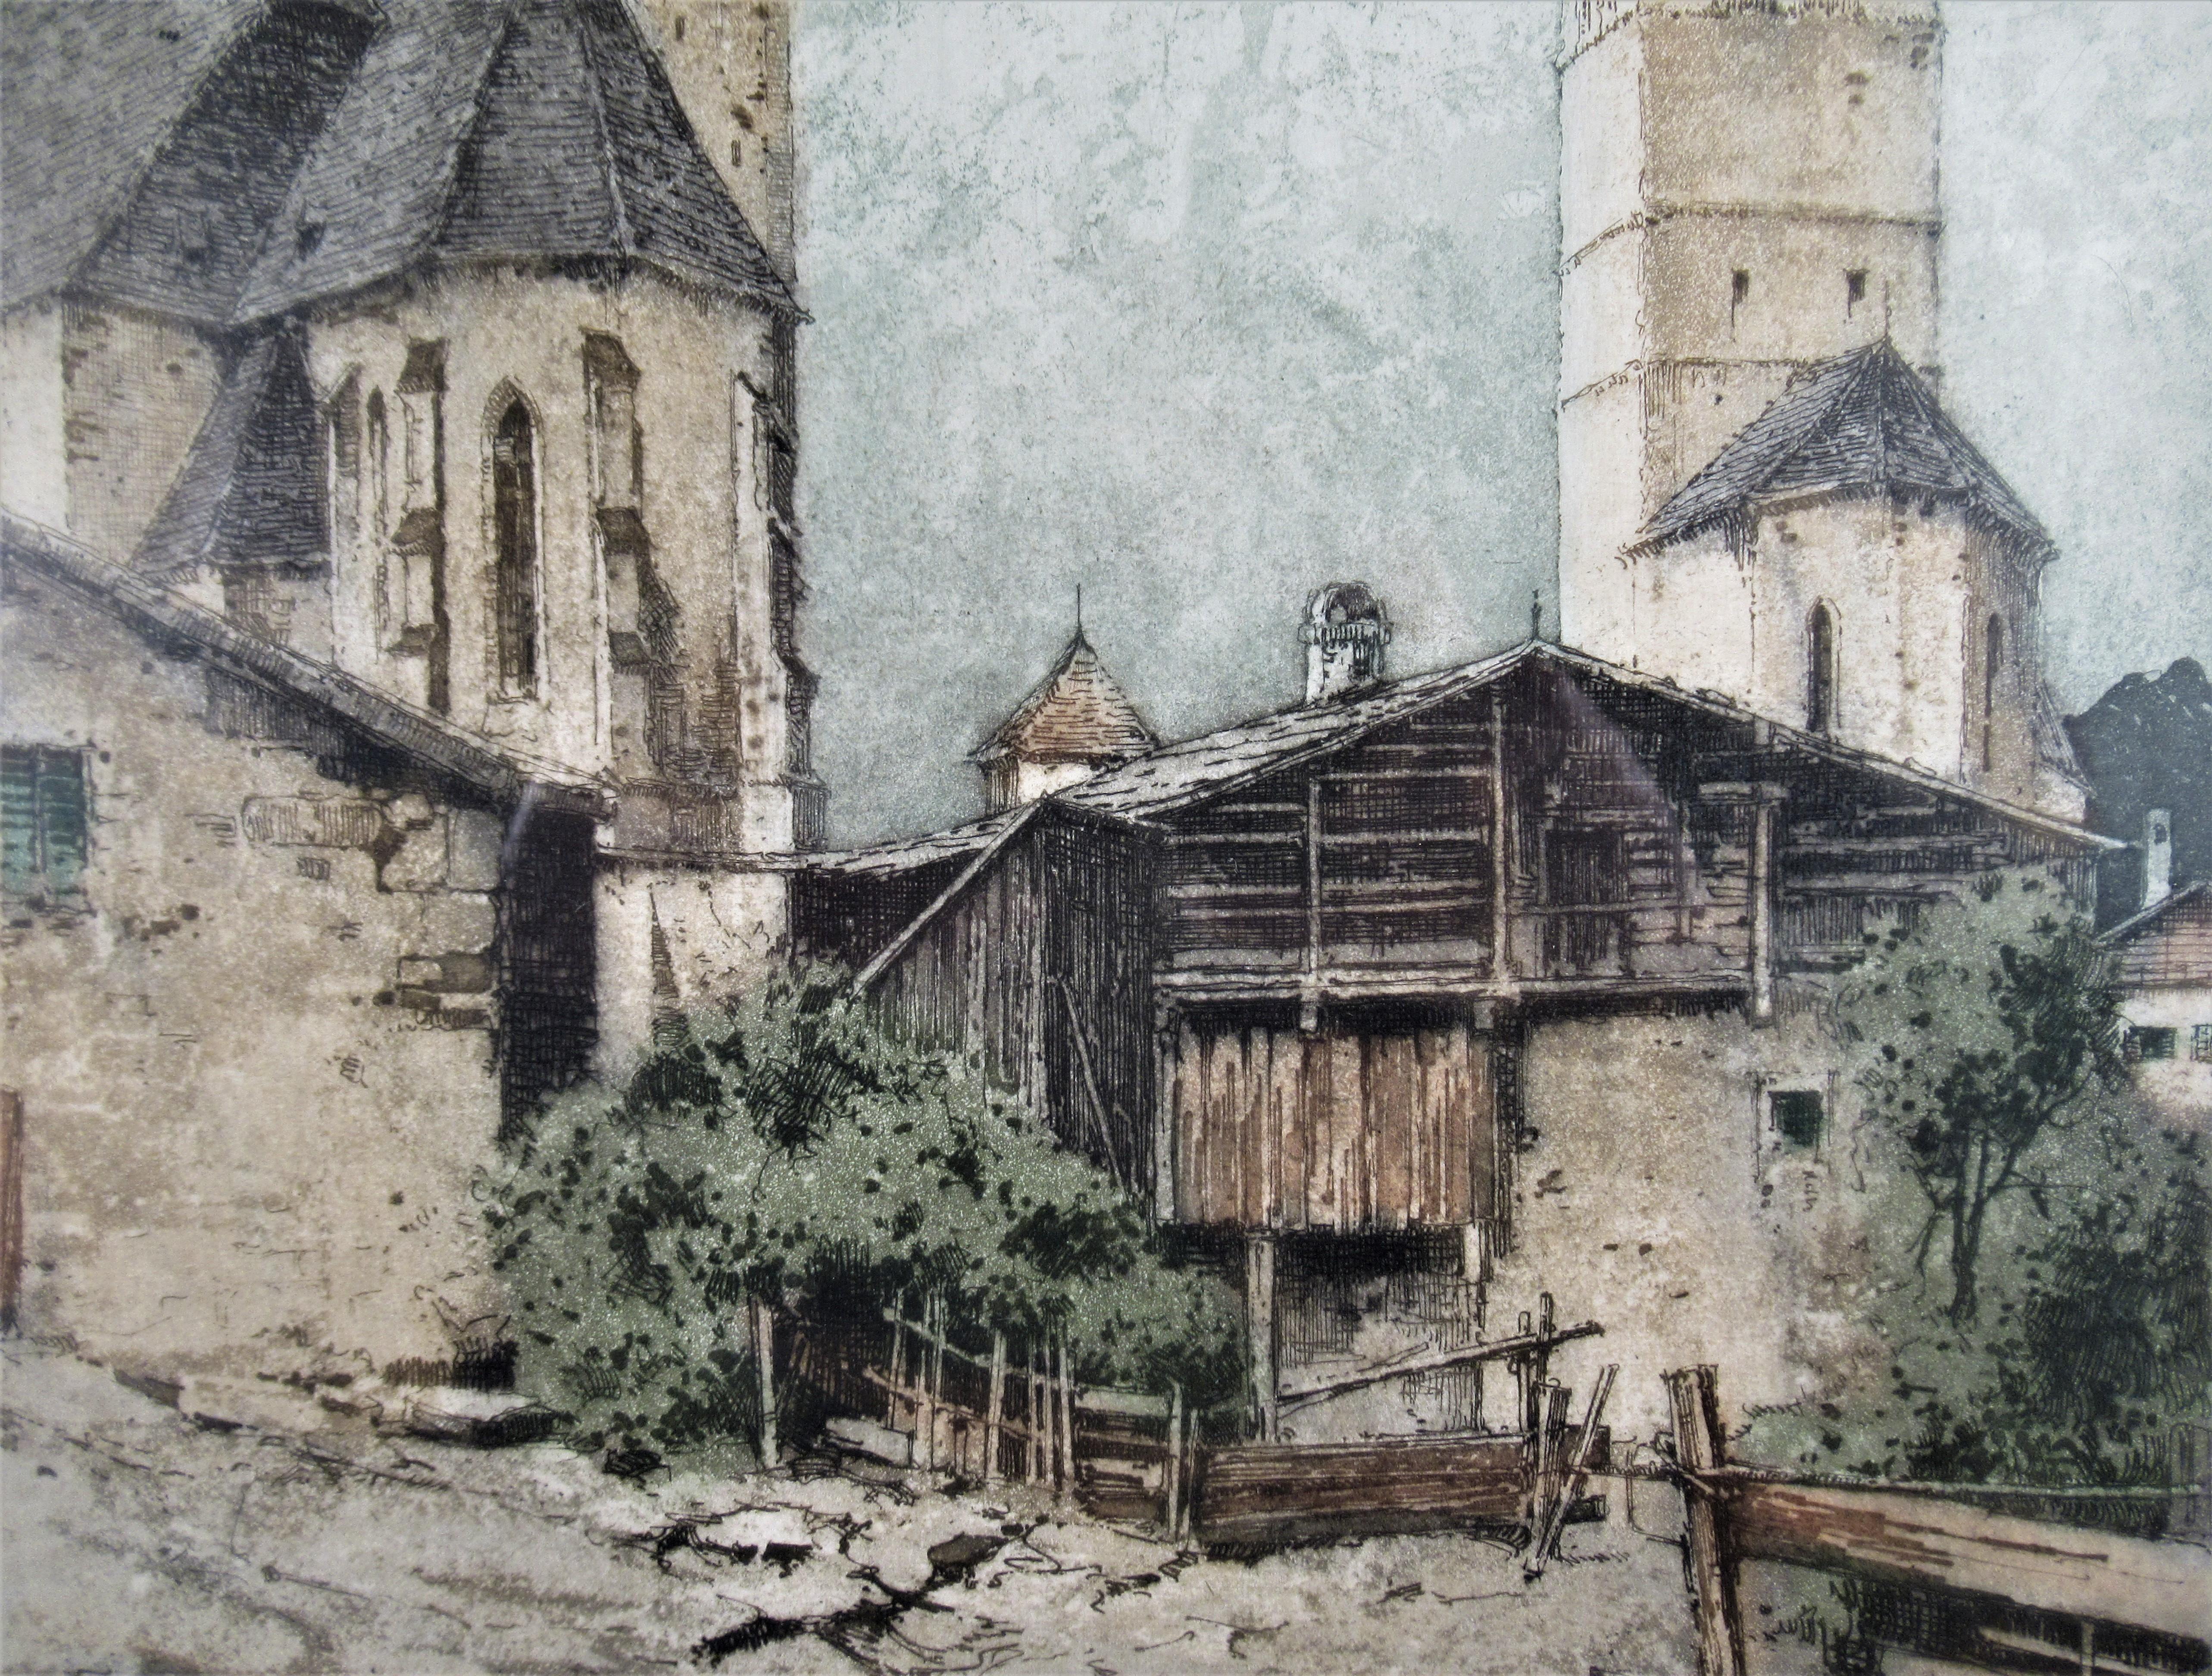 Kitzbuehel, Tyrol - Brown Landscape Print by Josef Eidenberger